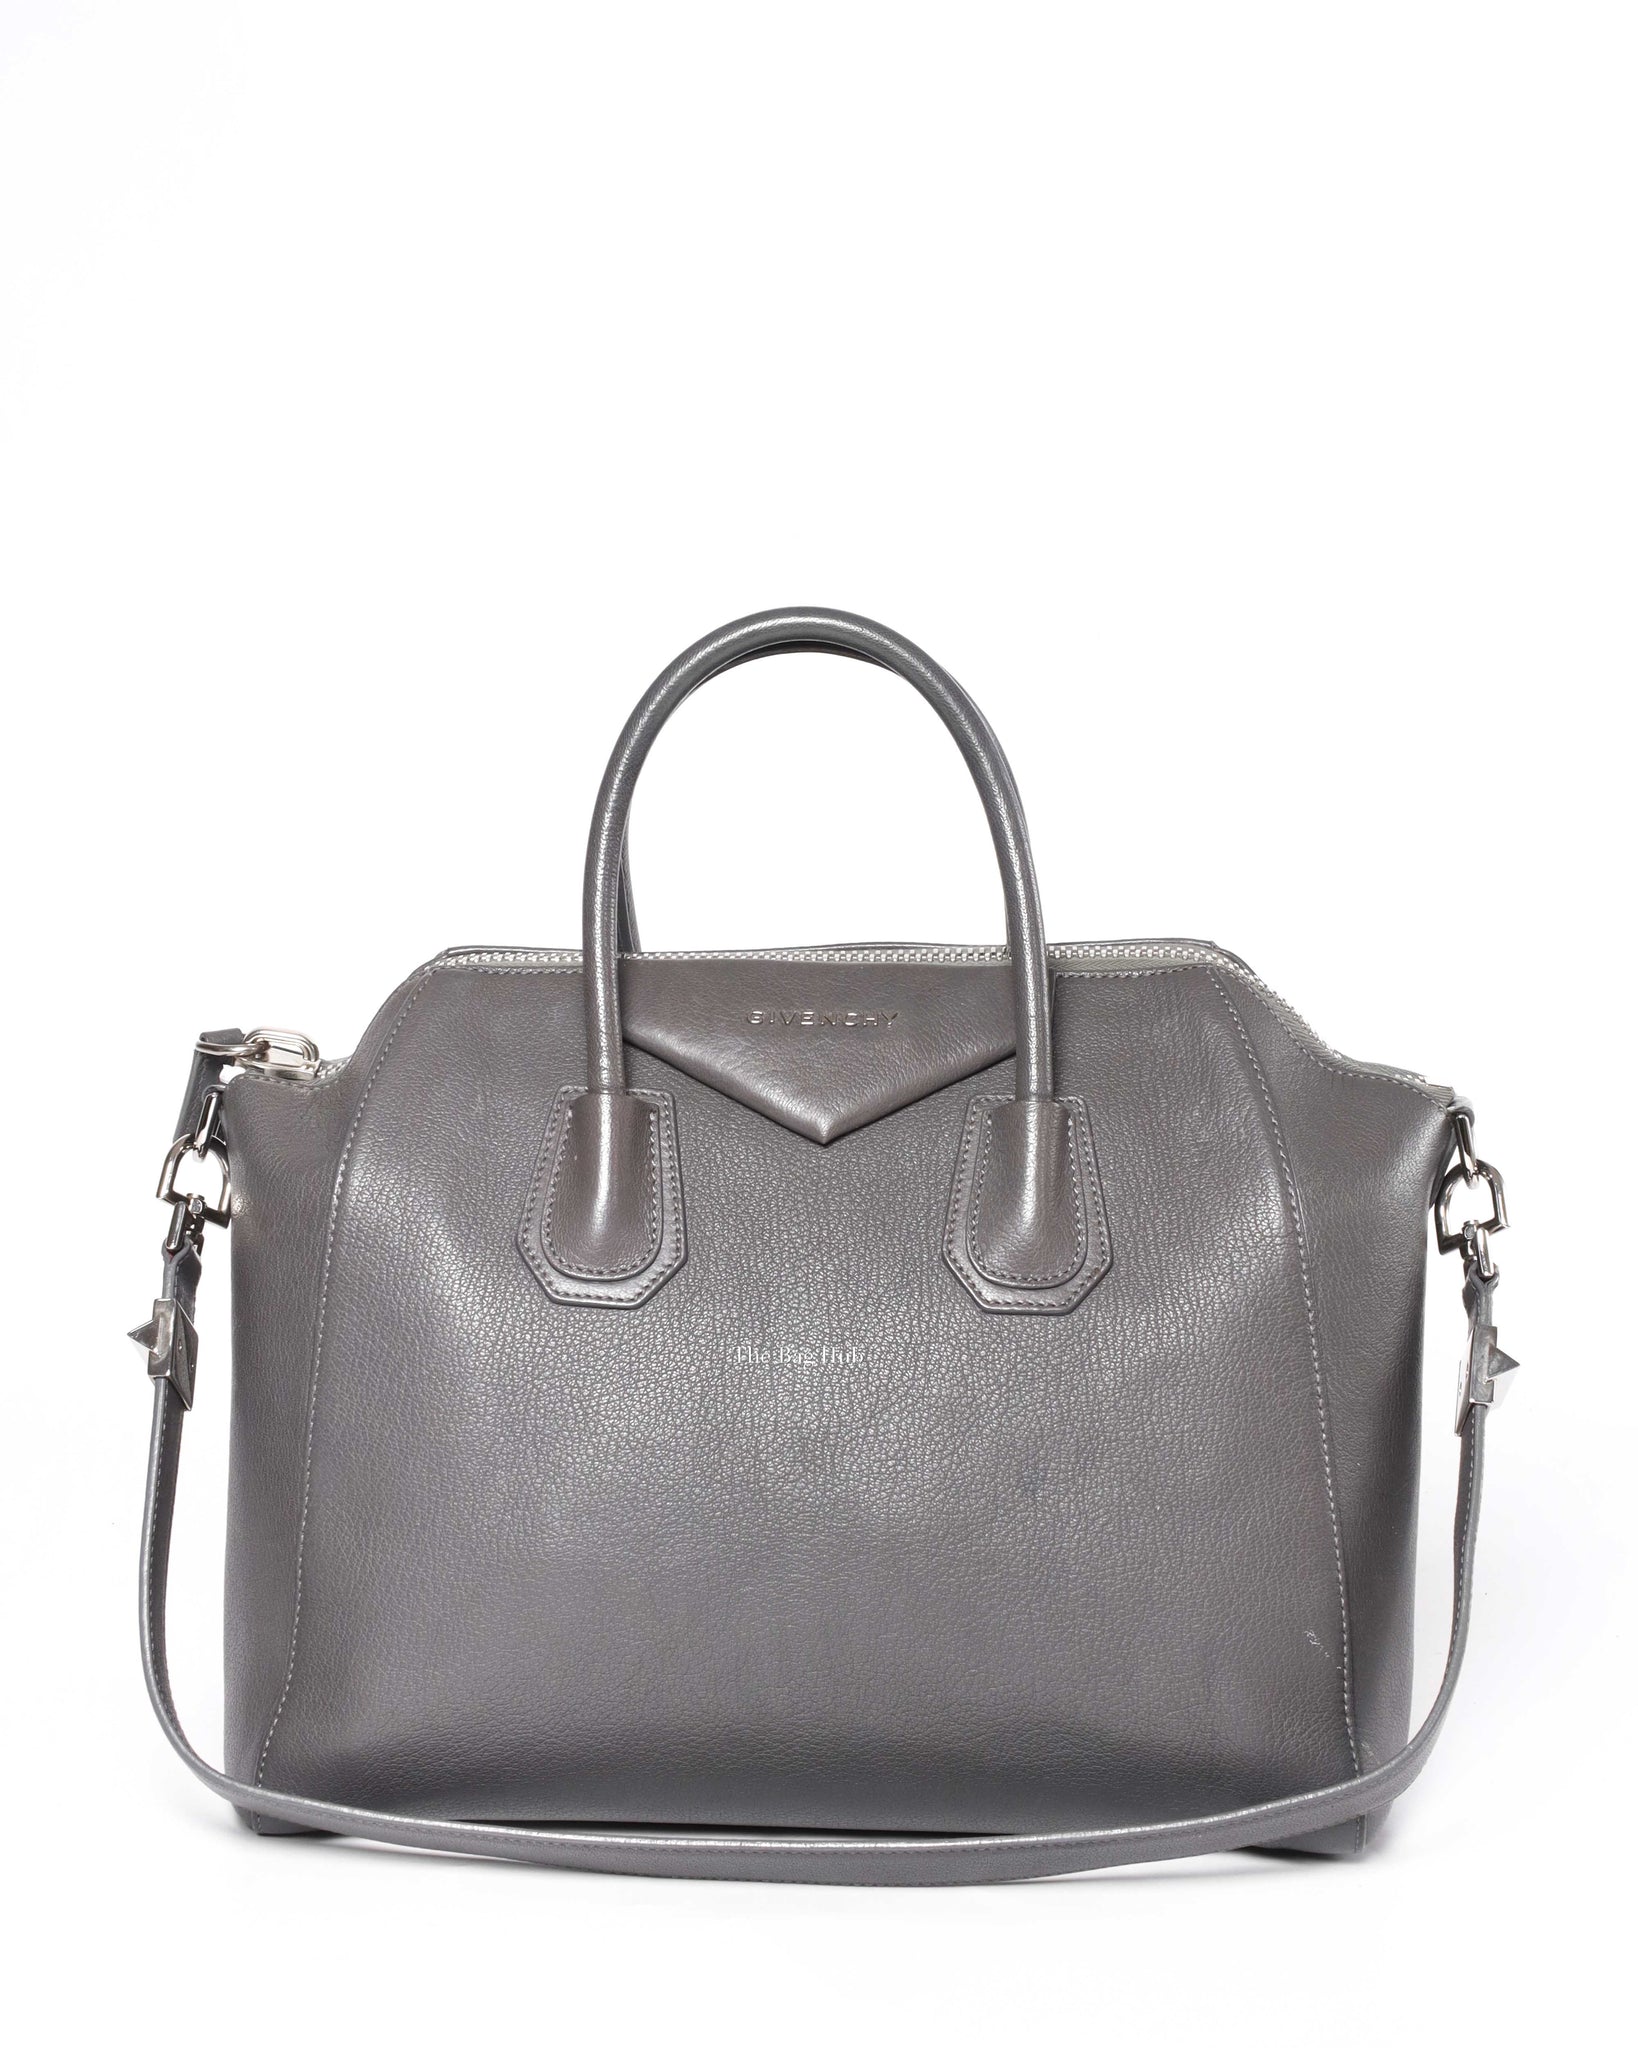 Givenchy Grey Leather Medium Antigona Bag-2